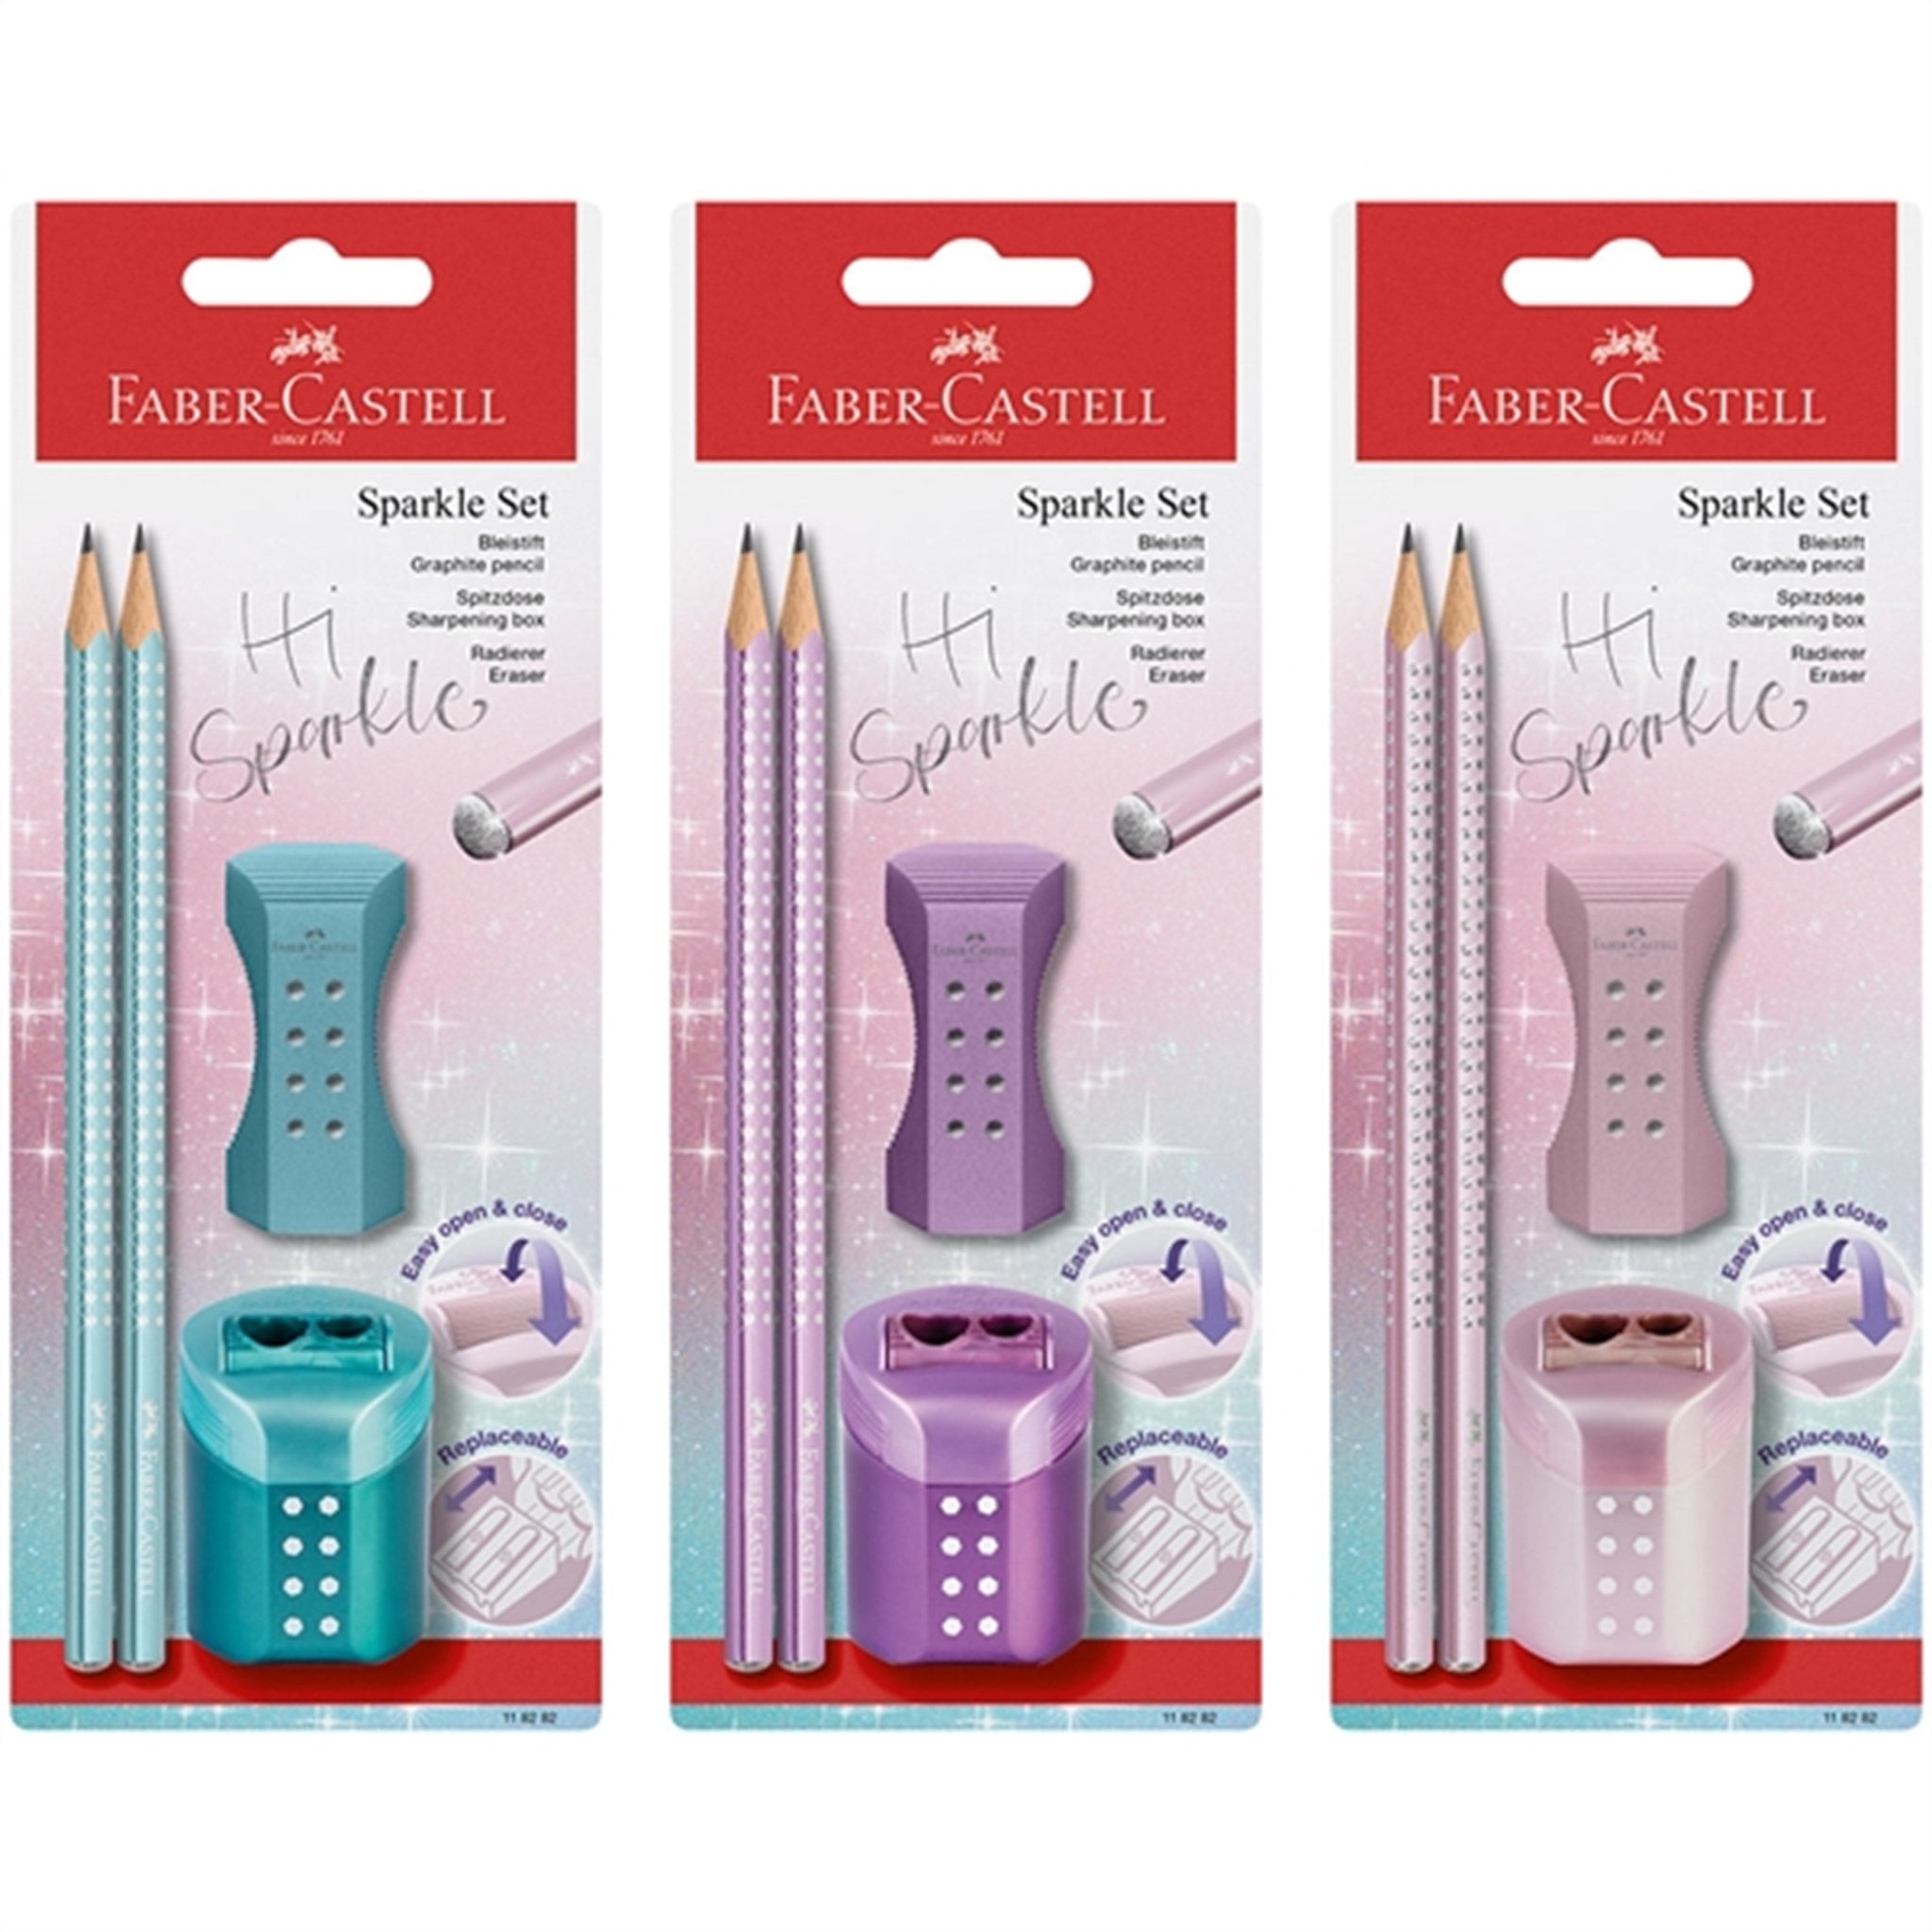 Faber-Castell Sparkle 2 Pennor, Suddgummi, Pennvässare - Rosa 2